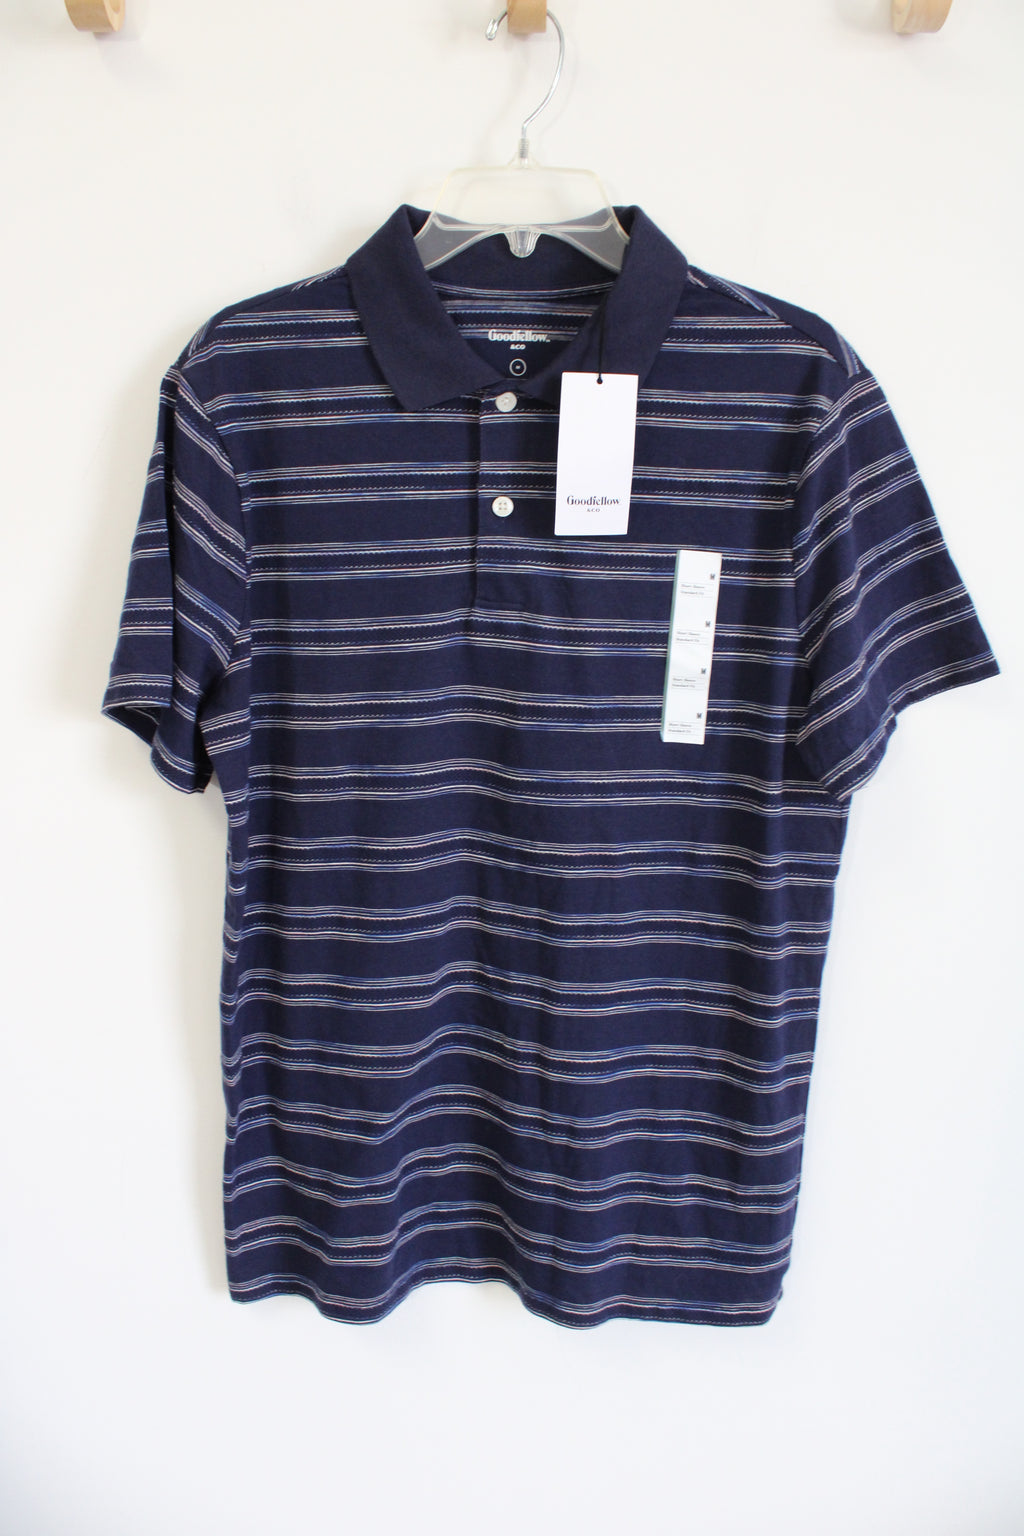 Goodfellow & Co. Blue Striped Cotton Polo Standard Fit Shirt | M